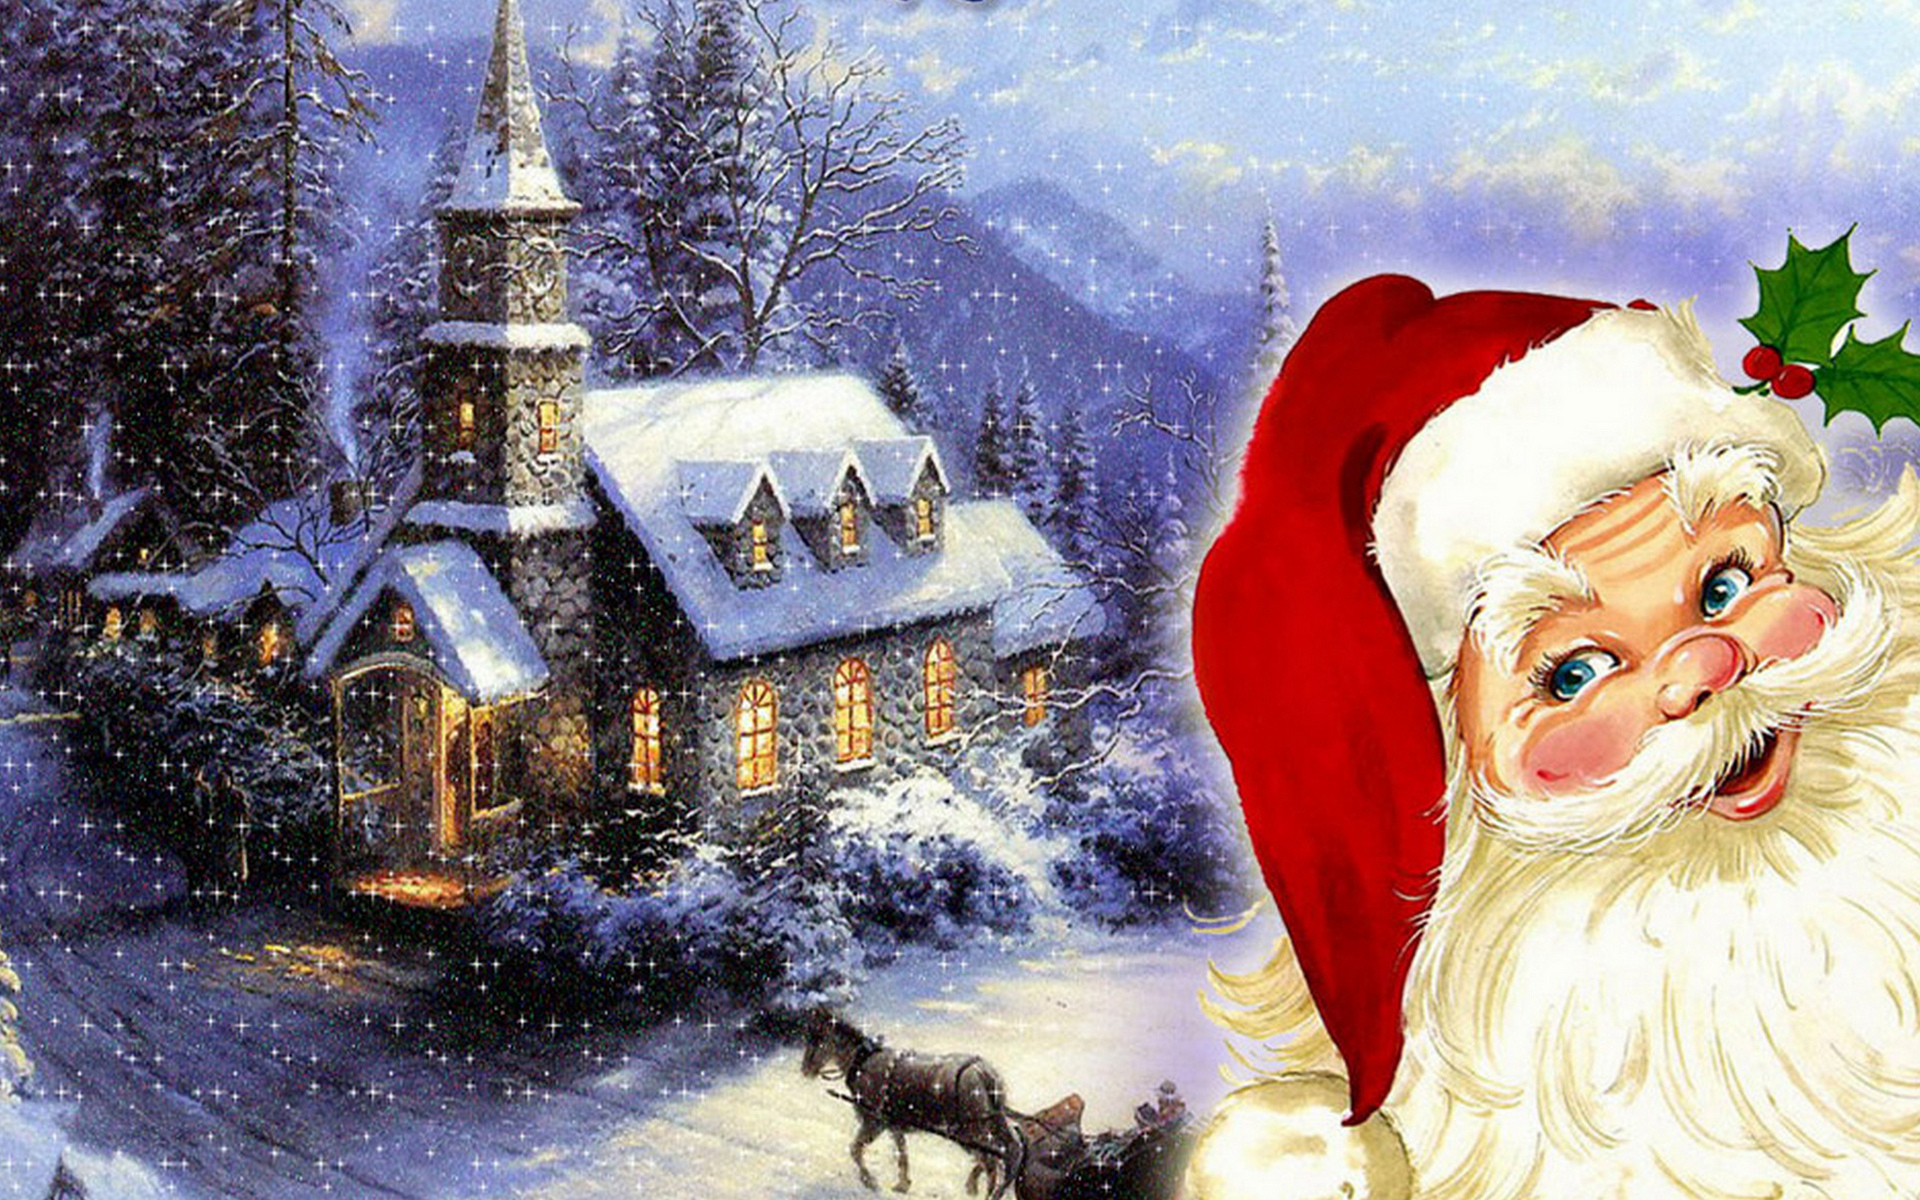 Santa Claus Image Wallpaper With